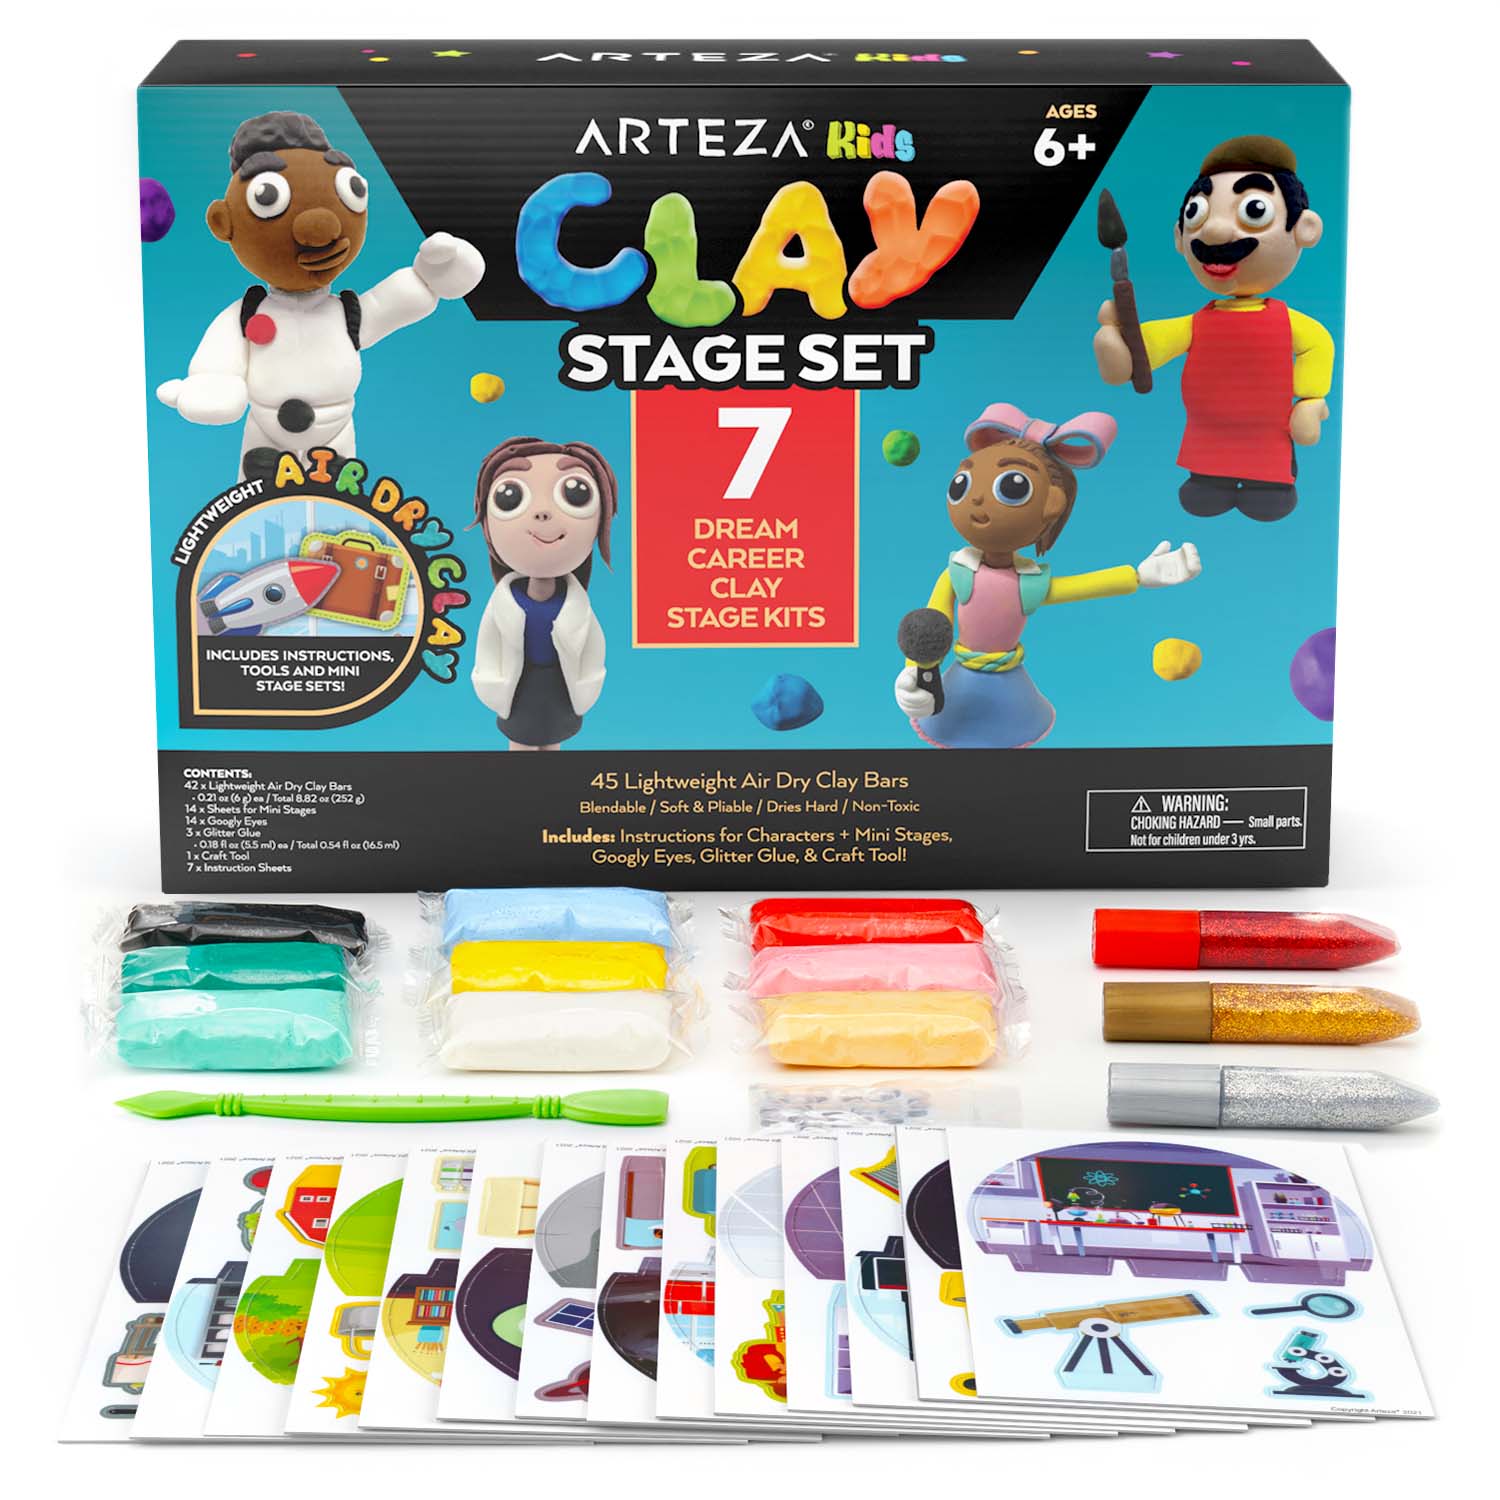 Arteza Kids Decorative Scissors, Set of 12 Different Patterns, 5.5 Inches, Craft